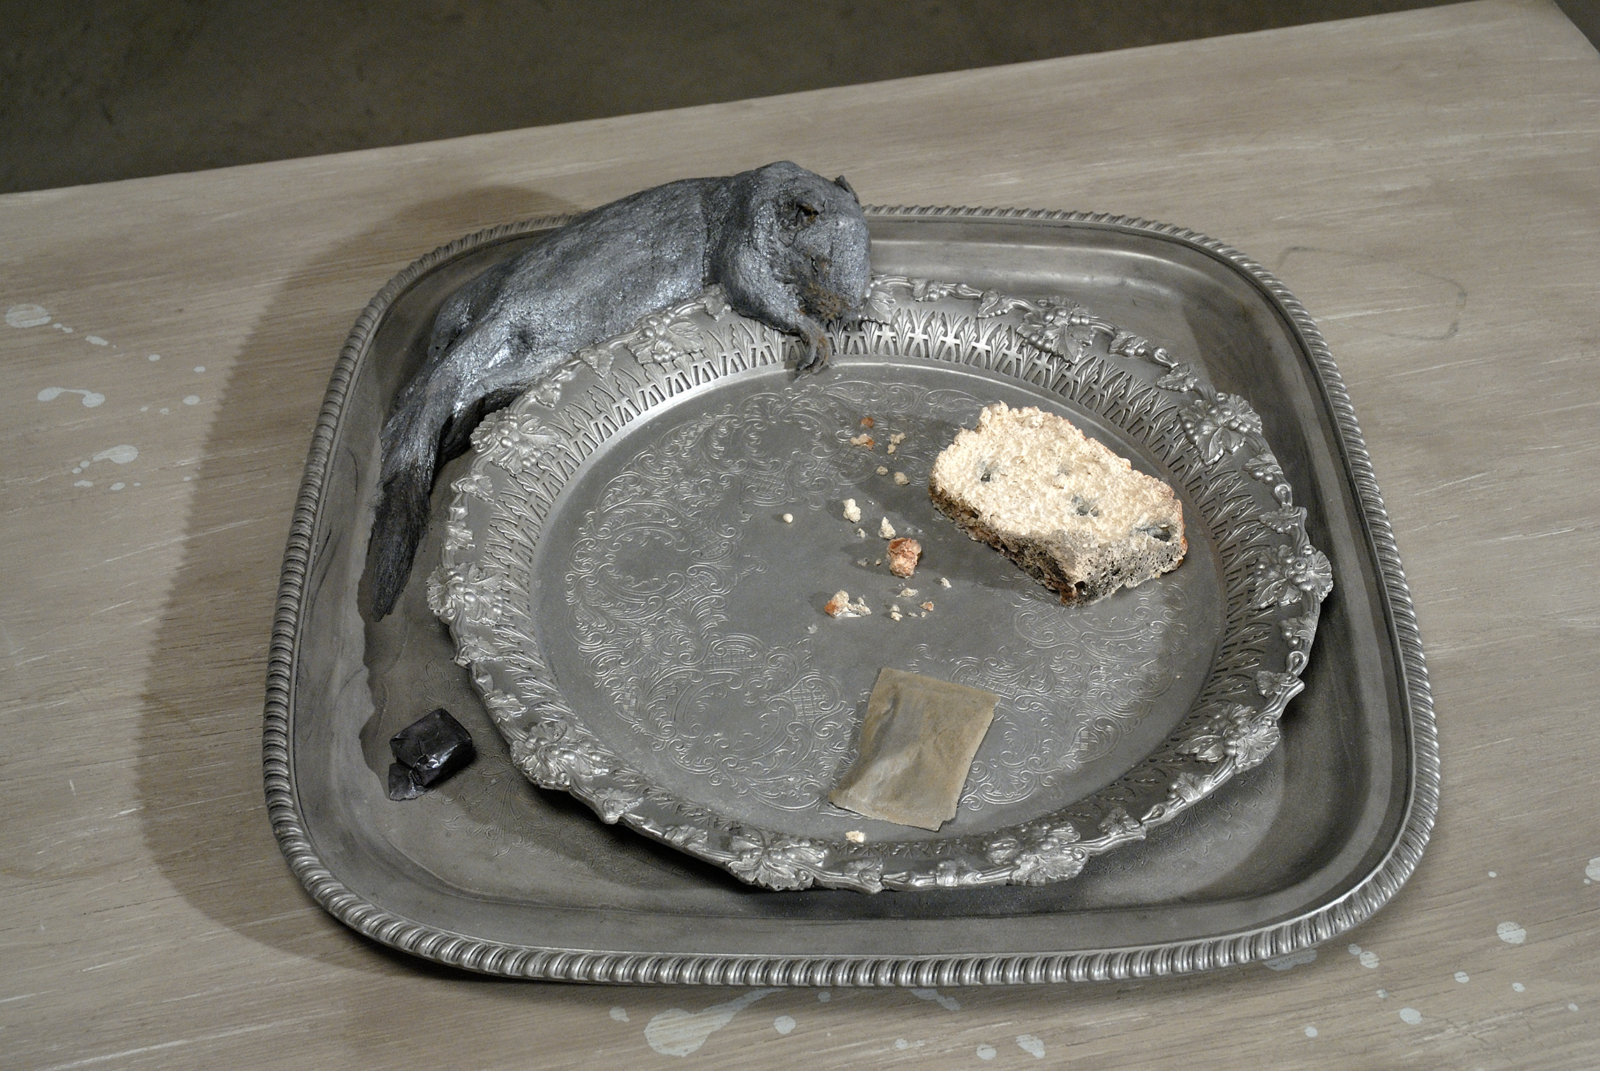 Liz Magor, Squirrel (cake), 2008, polymerized gypsum, 4 x 24 x 32 in. (10 x 60 x 80 cm)